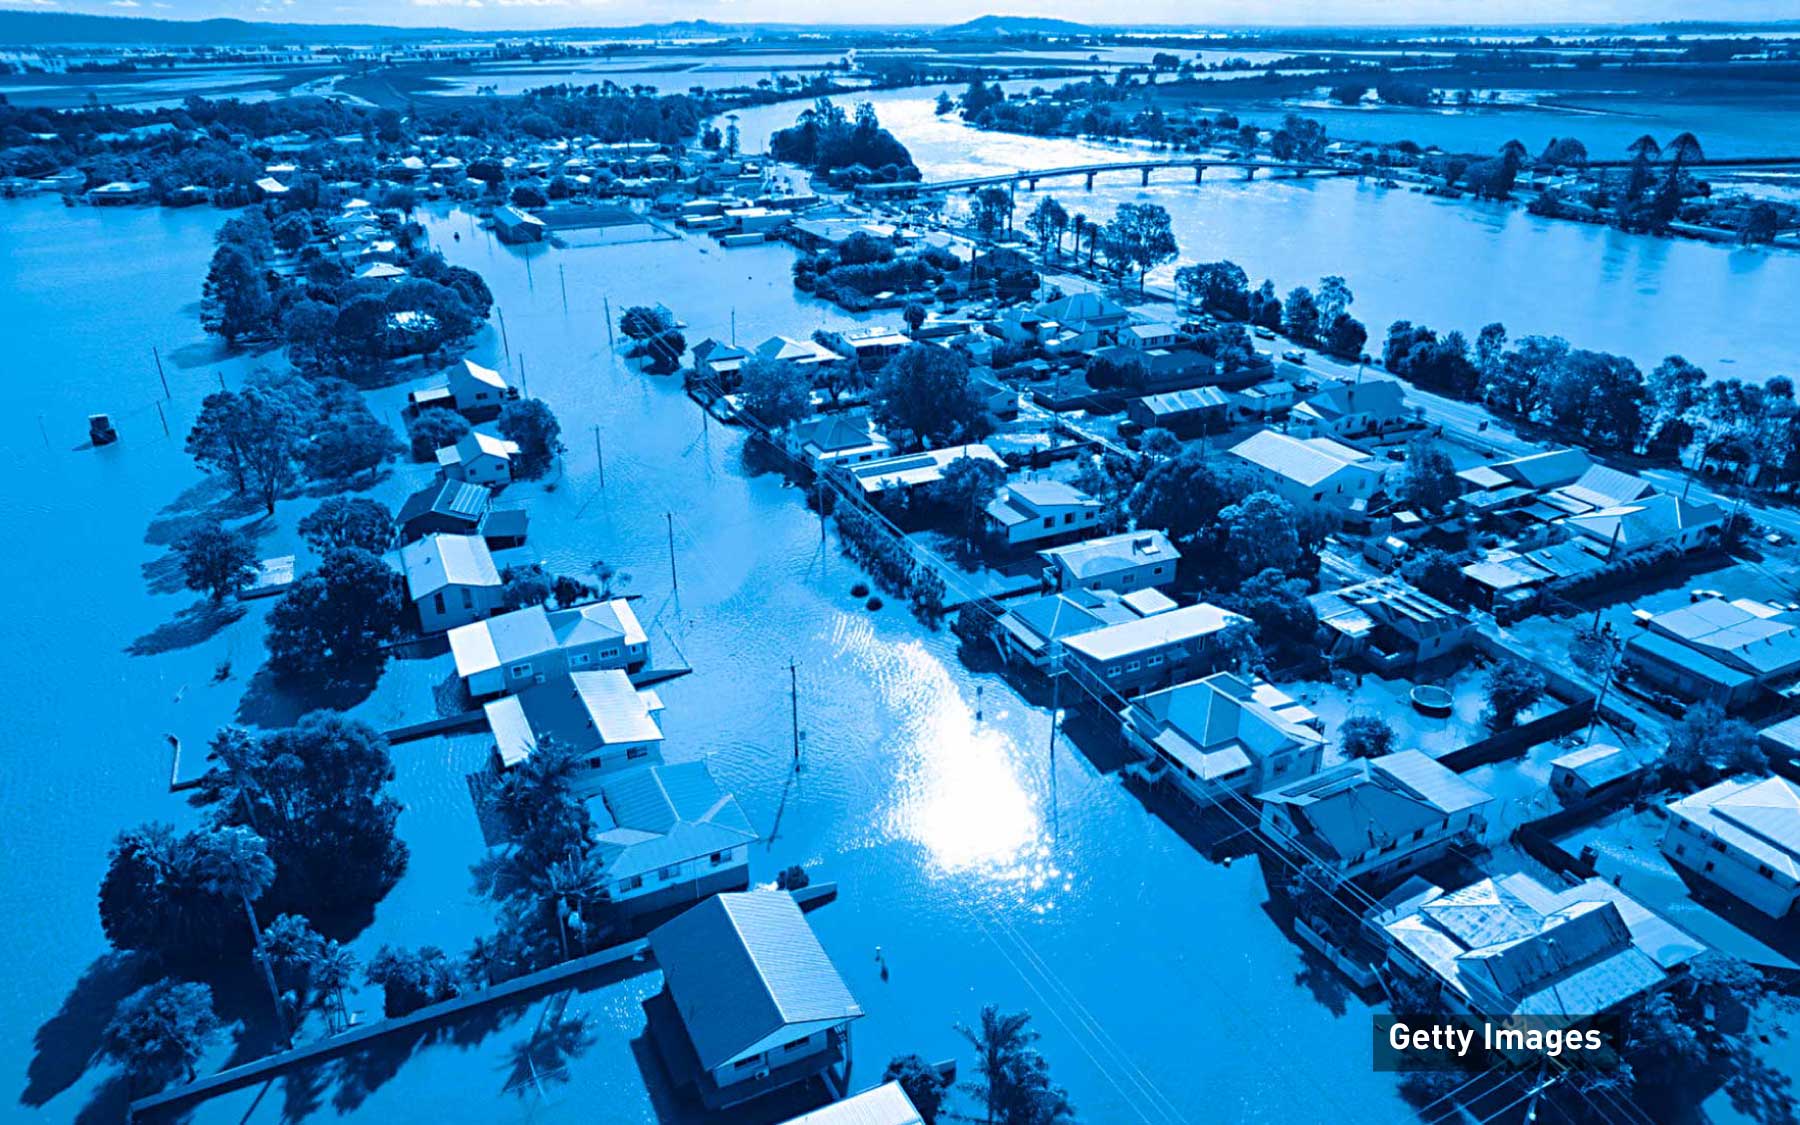 Cataclysmic floods prompt managed retreat